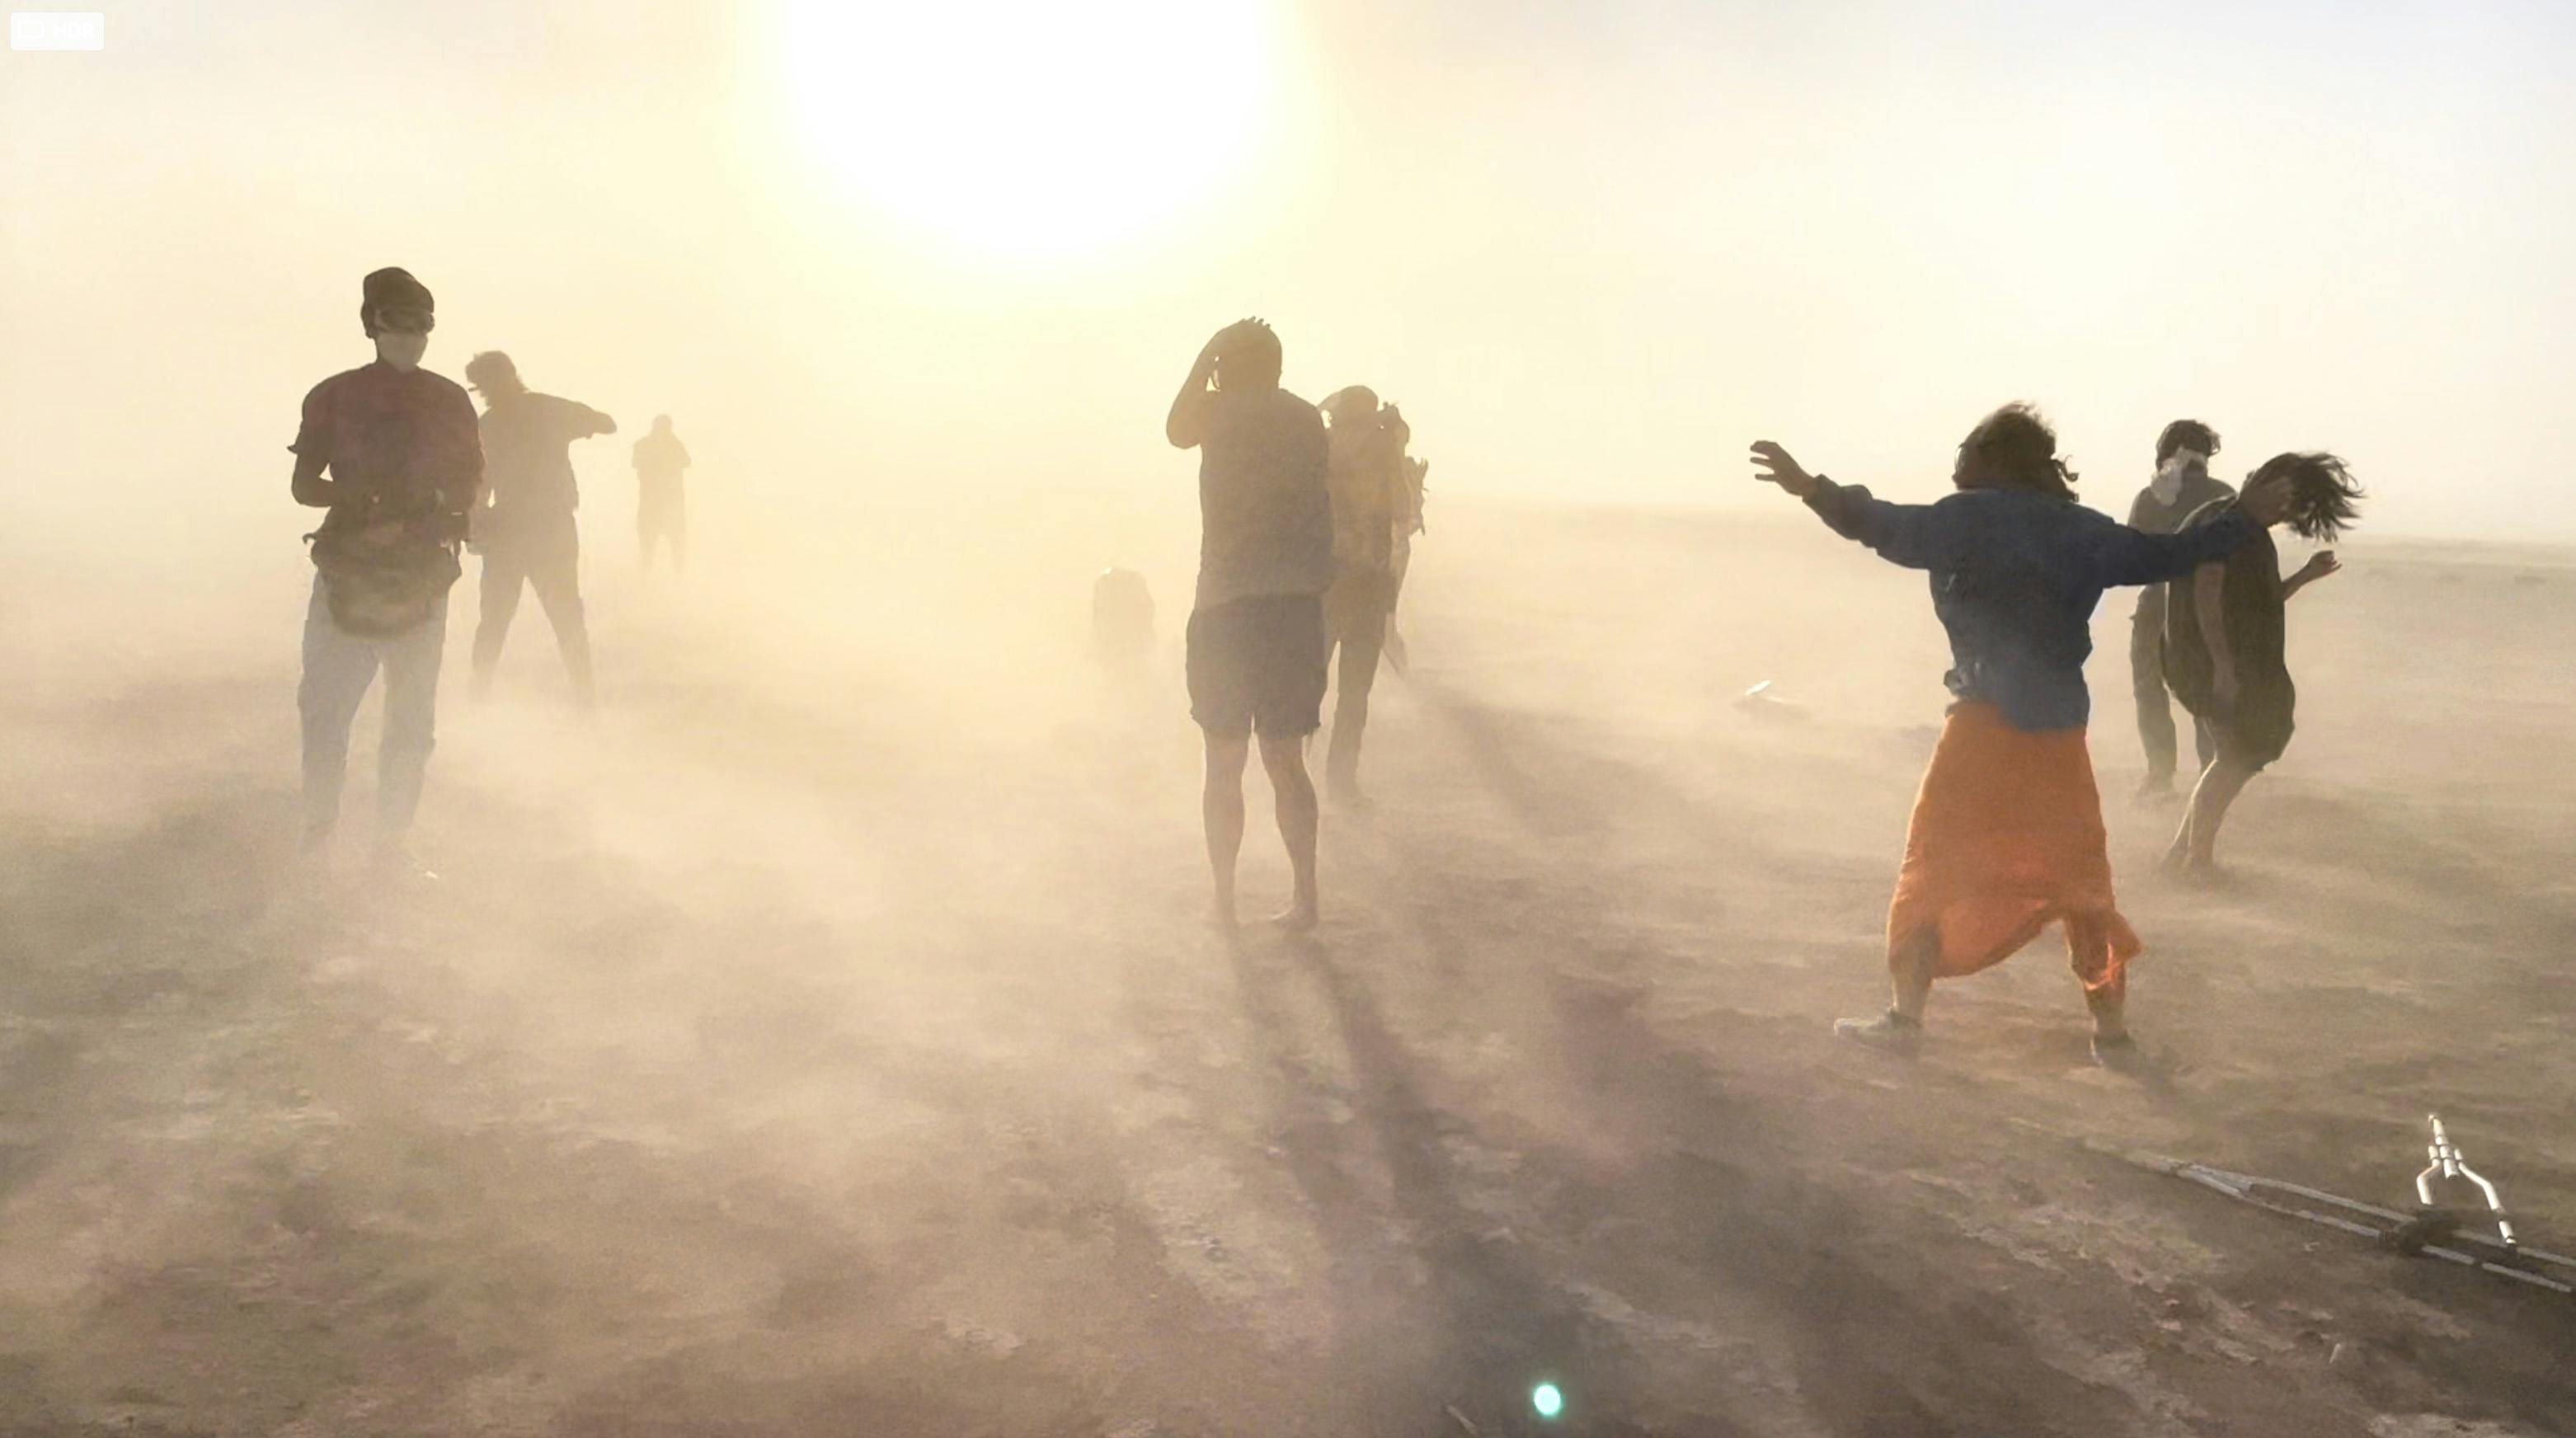 Desert rave led by @alejandro at a 25mph dust storm